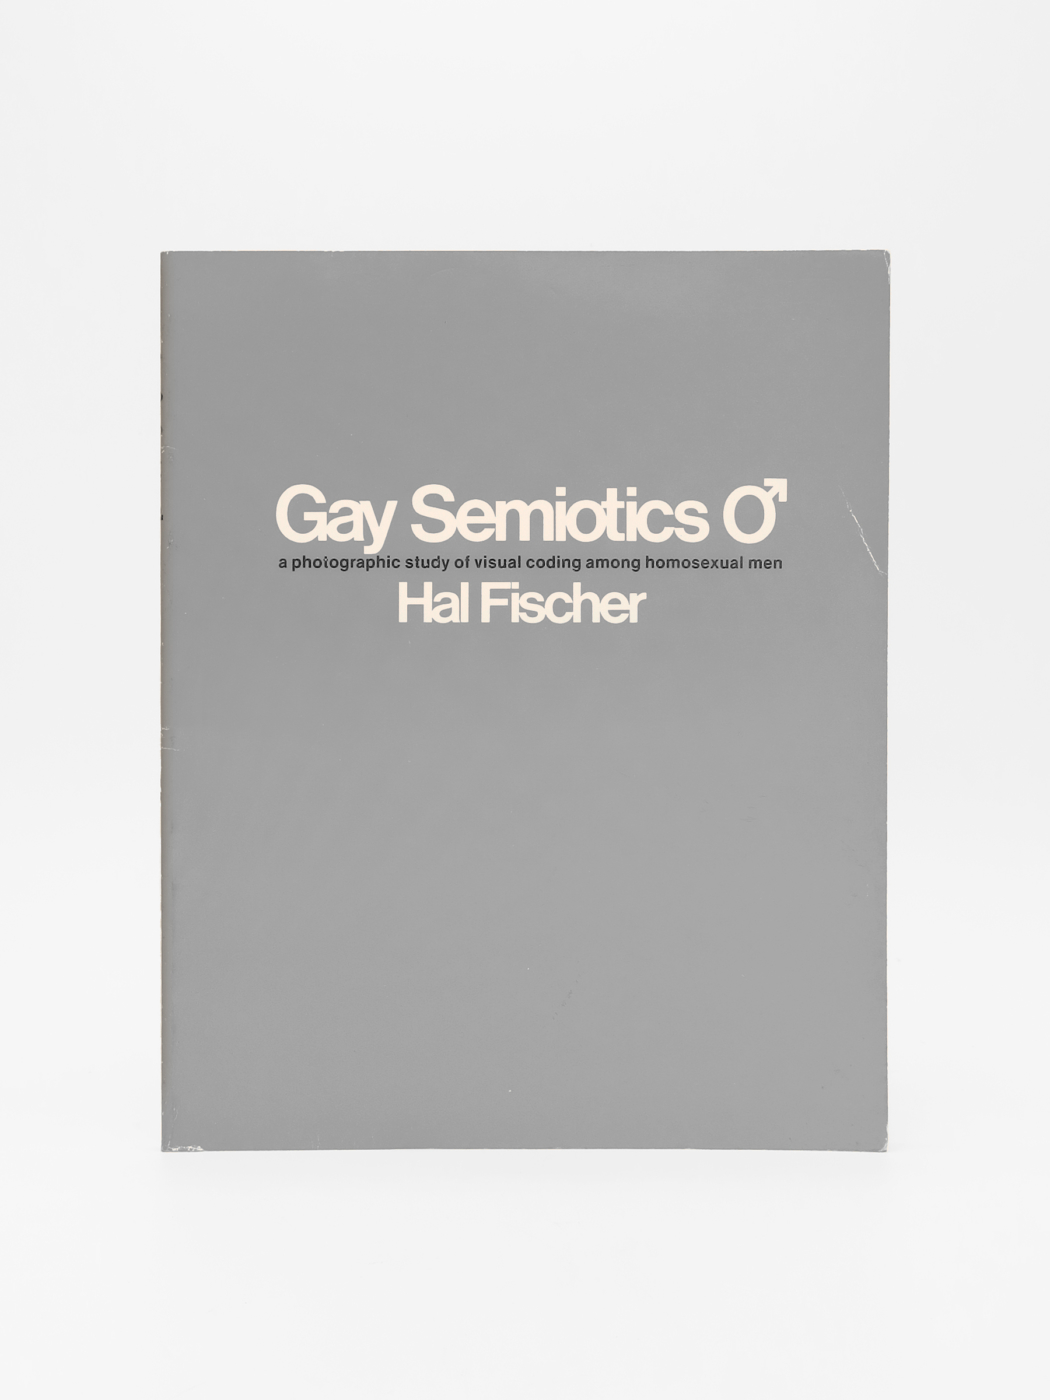 Hal Fischer, Gay Semiotics